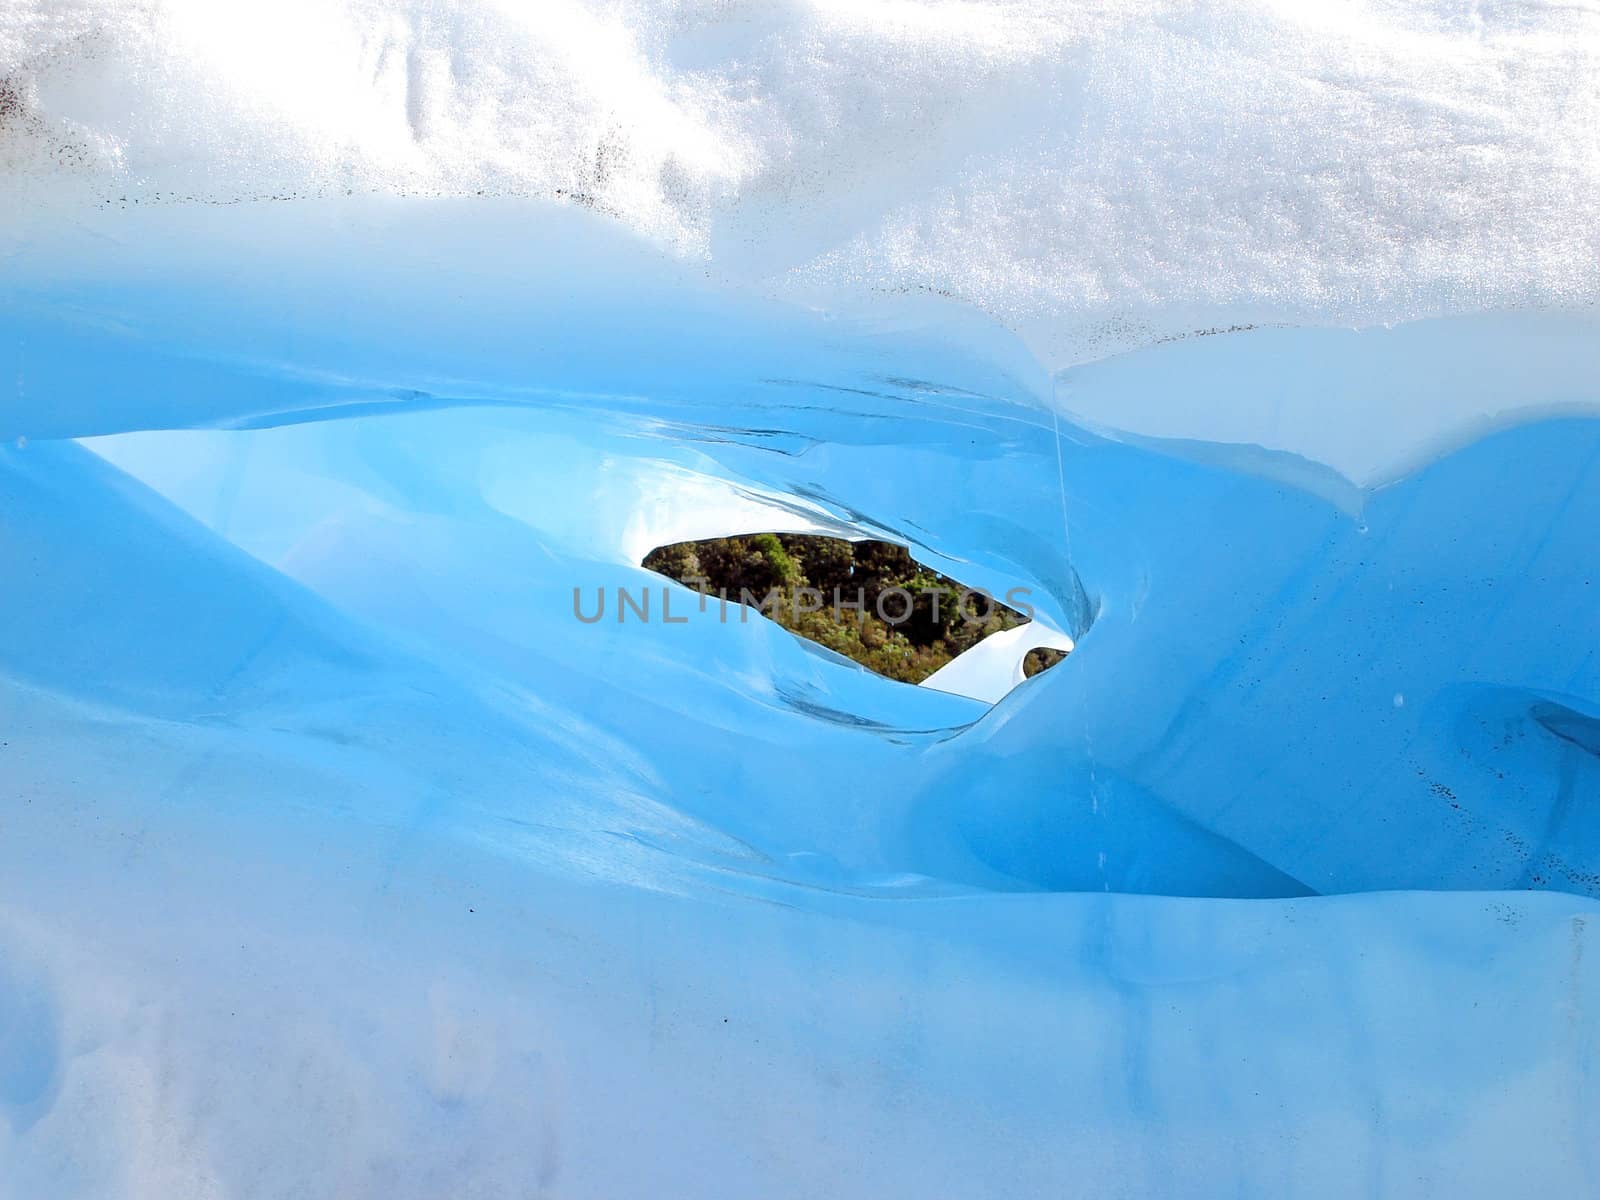 Melting Tunnel of Ice on Fox Glacier, New Zealand